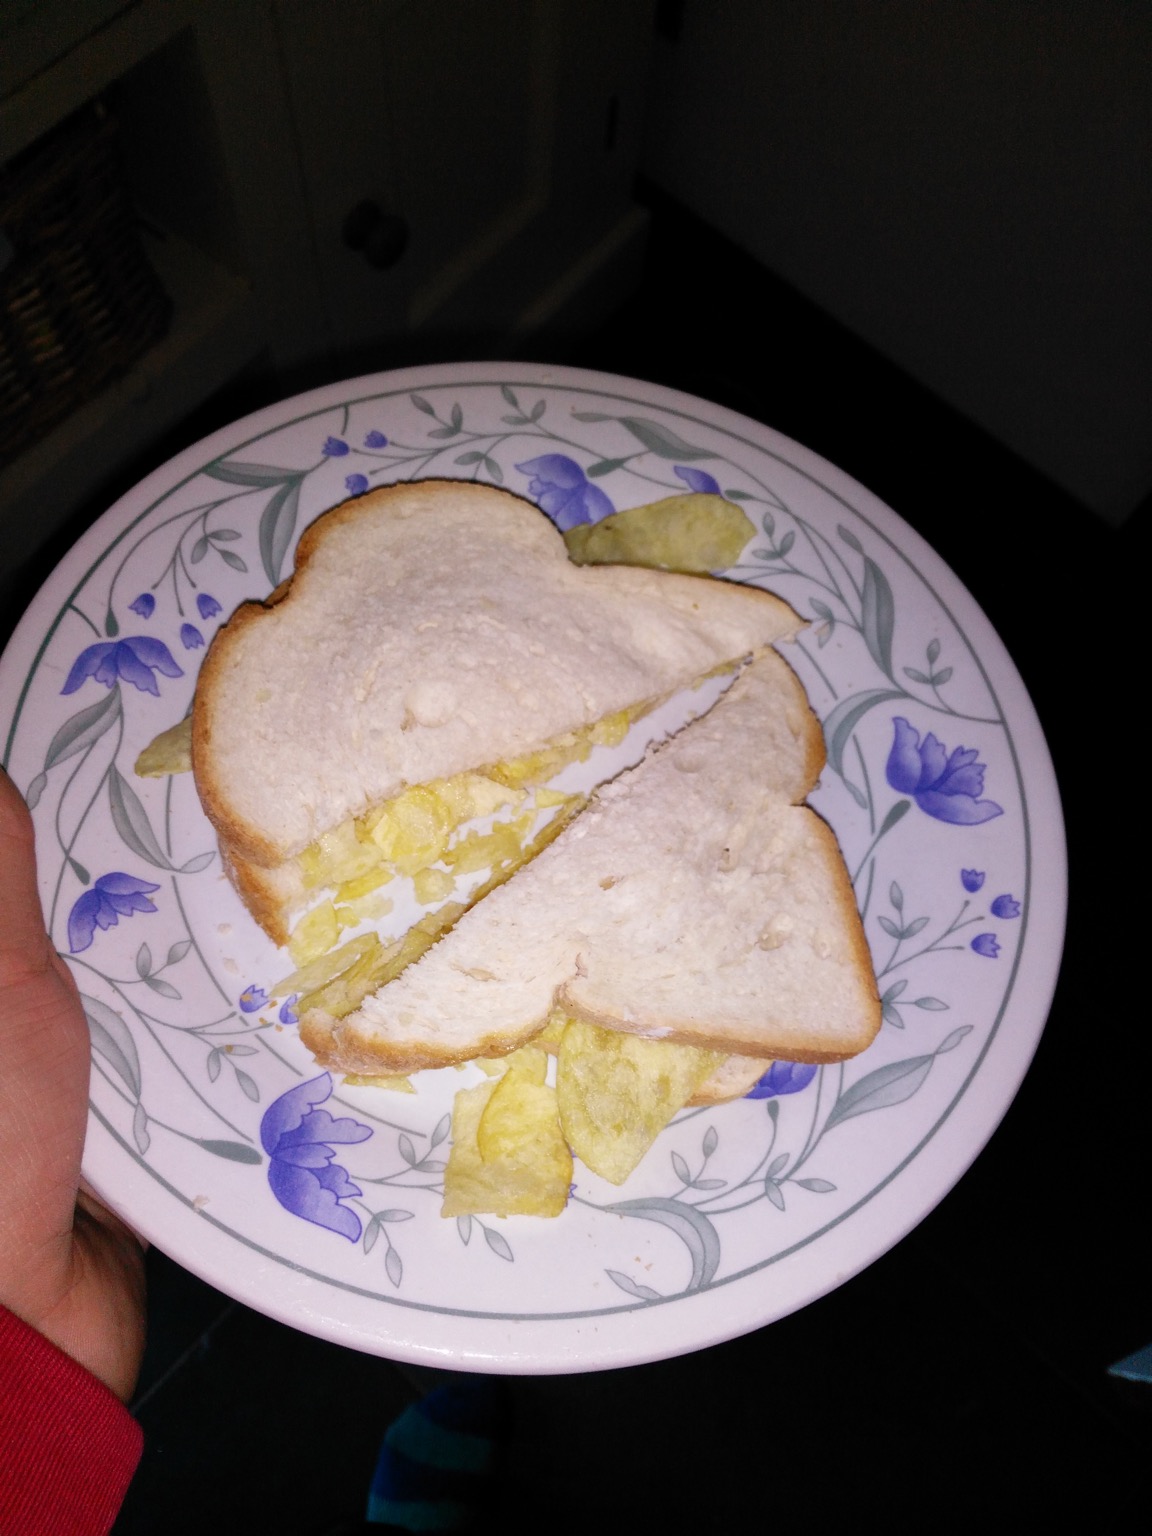 Flash photo of diagonally-cut white crisp sandwich